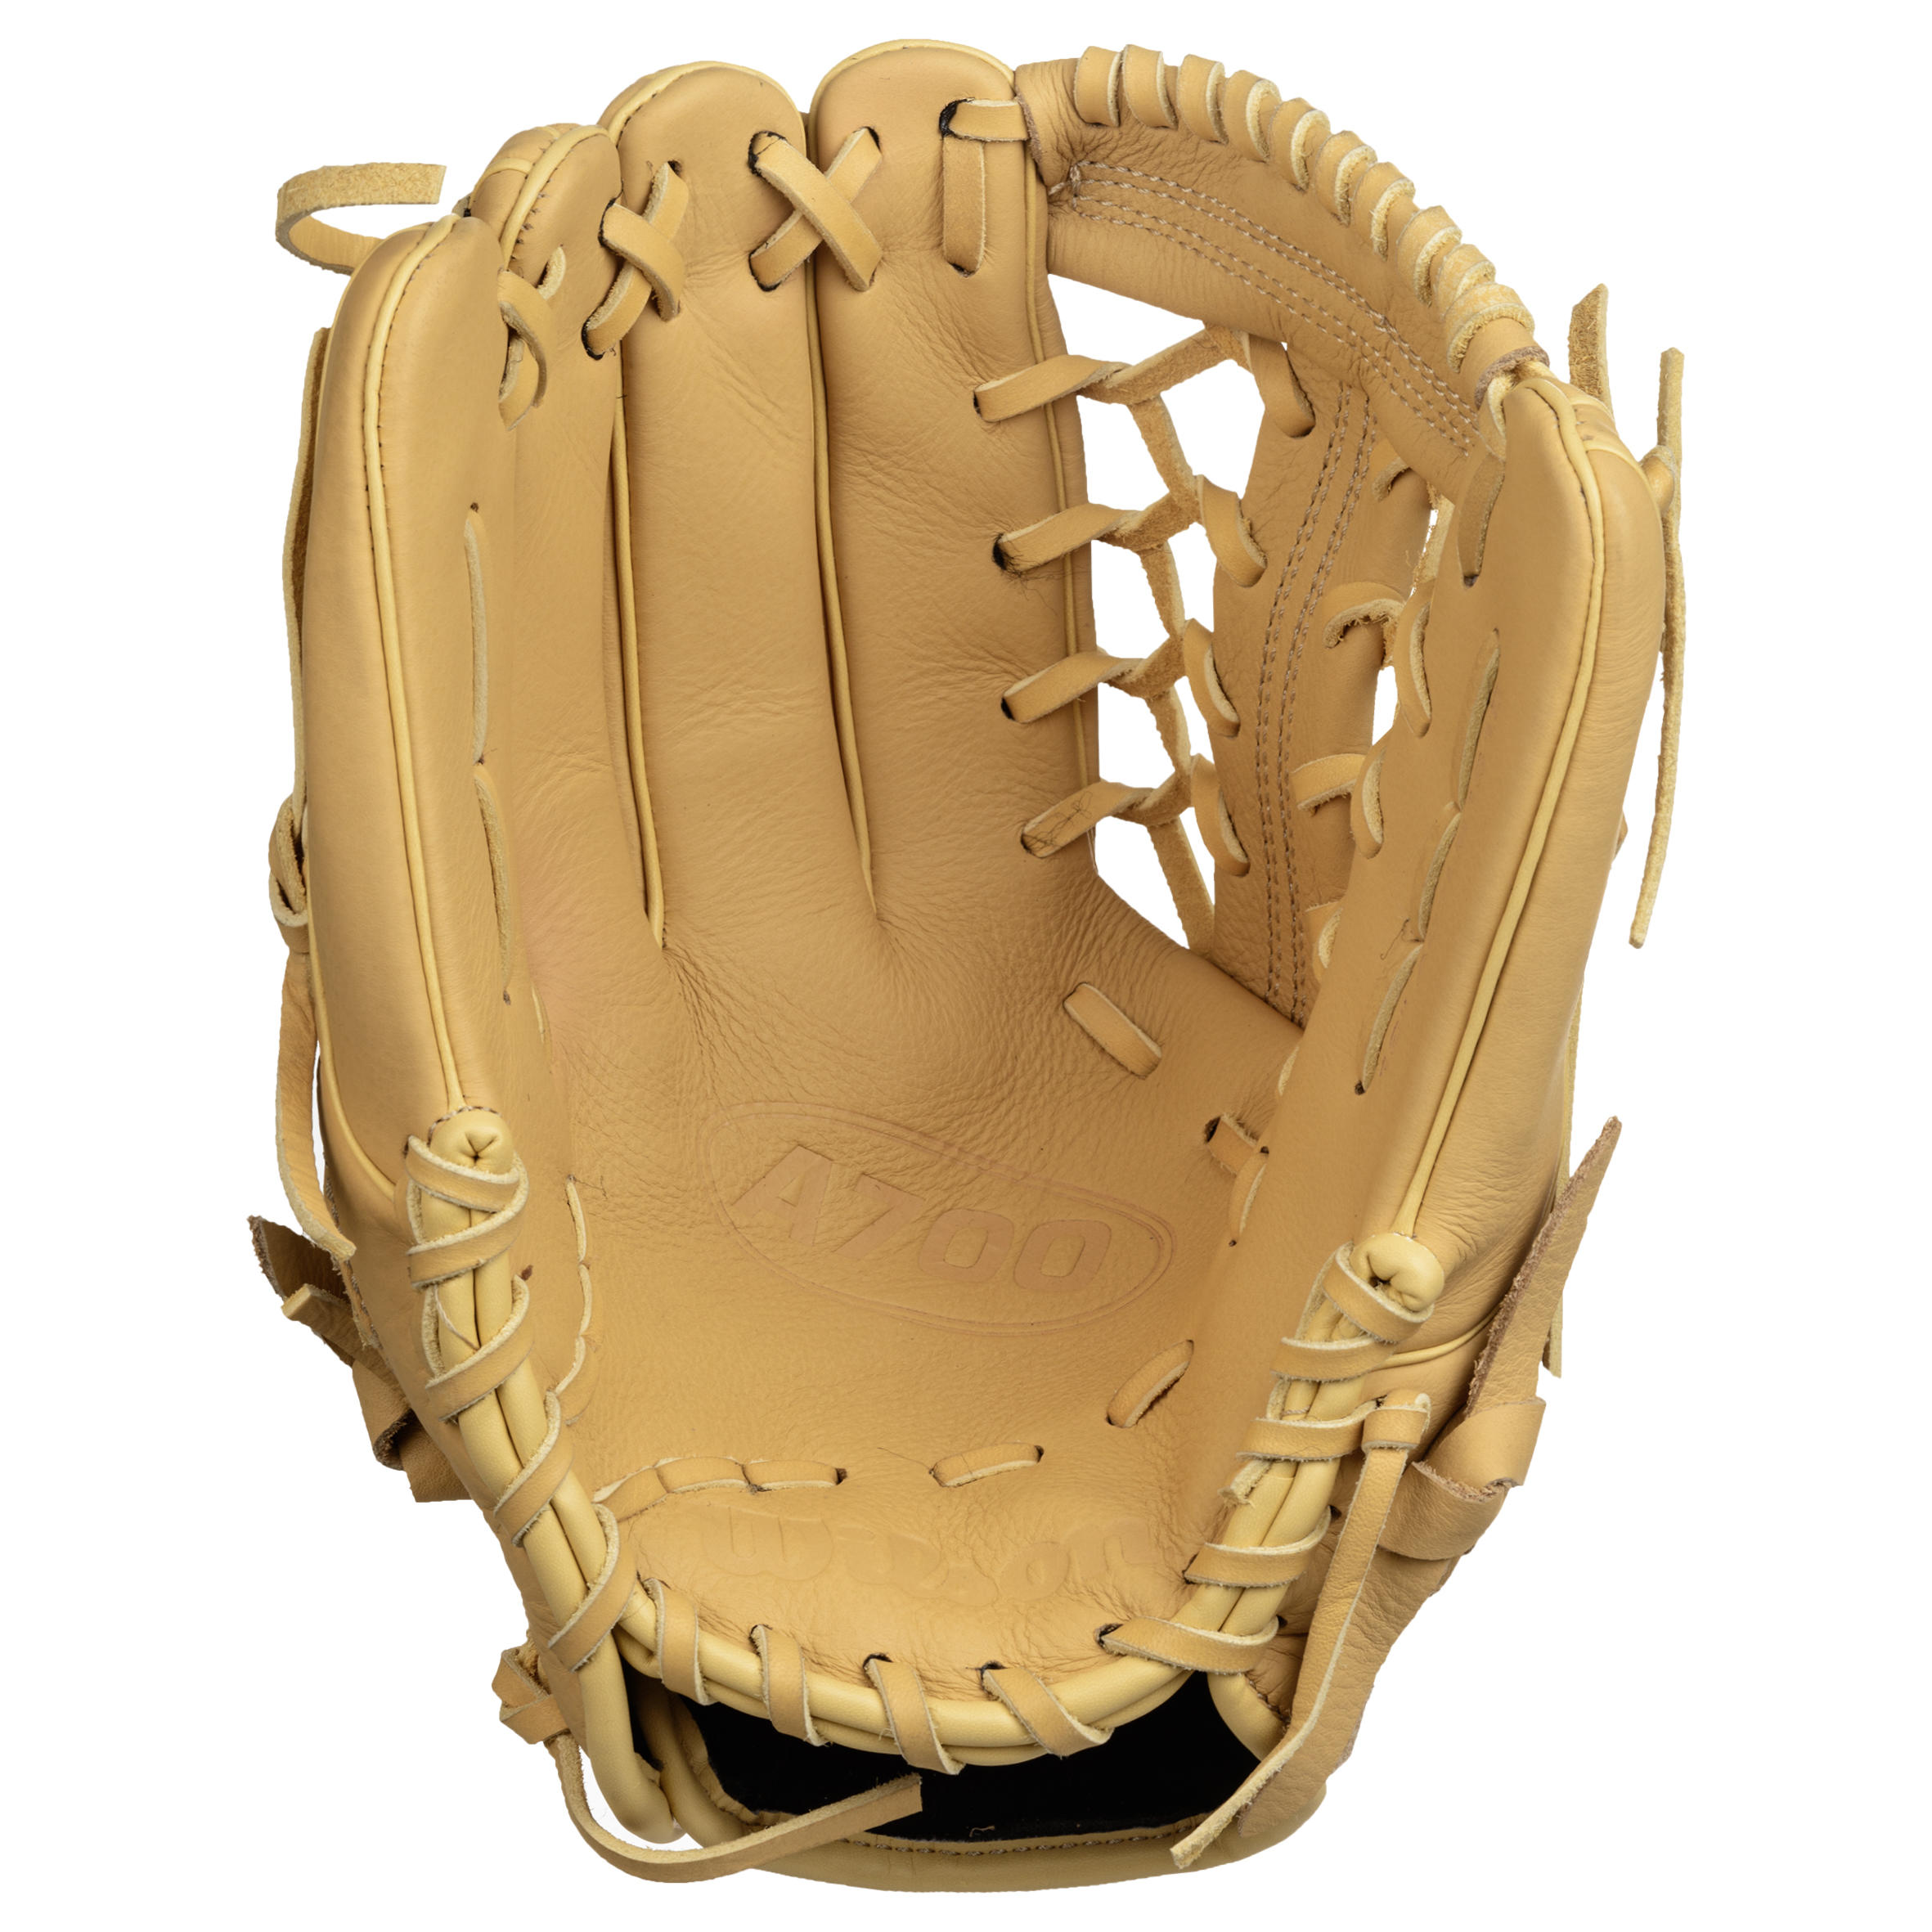 A700 12-Inch Right-Hand Baseball Glove - Beige 1/5